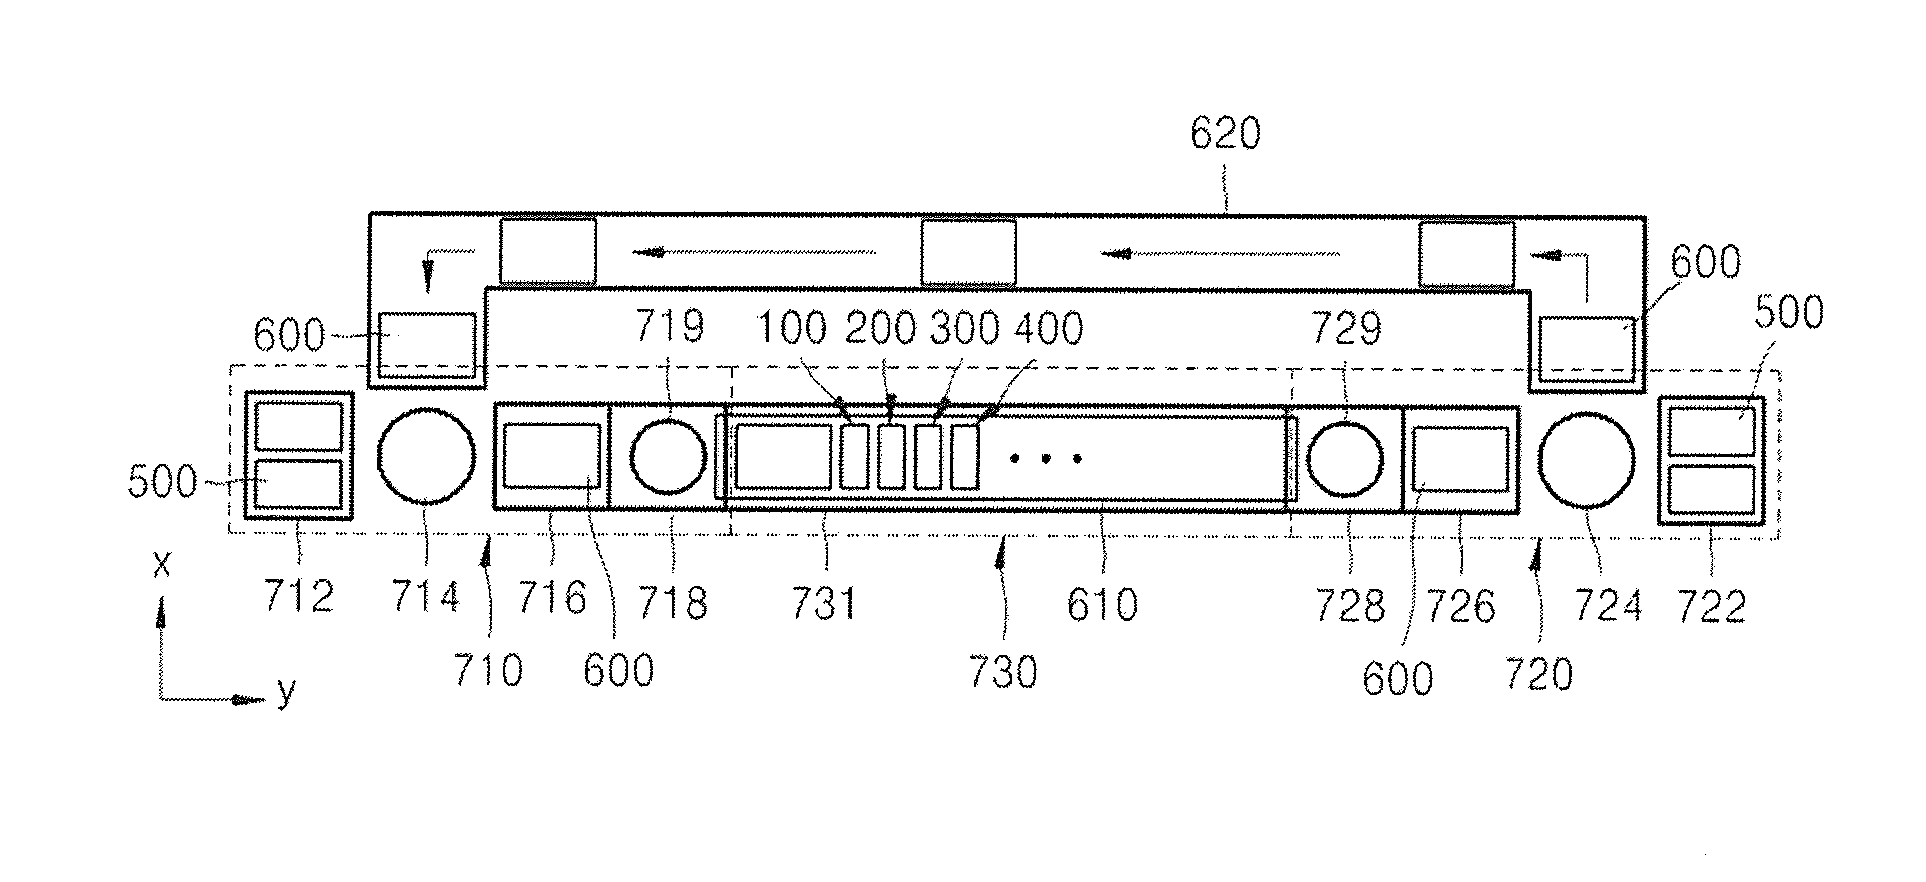 Thin film deposition apparatus and method of manufacturing organic light-emitting display apparatus using the same